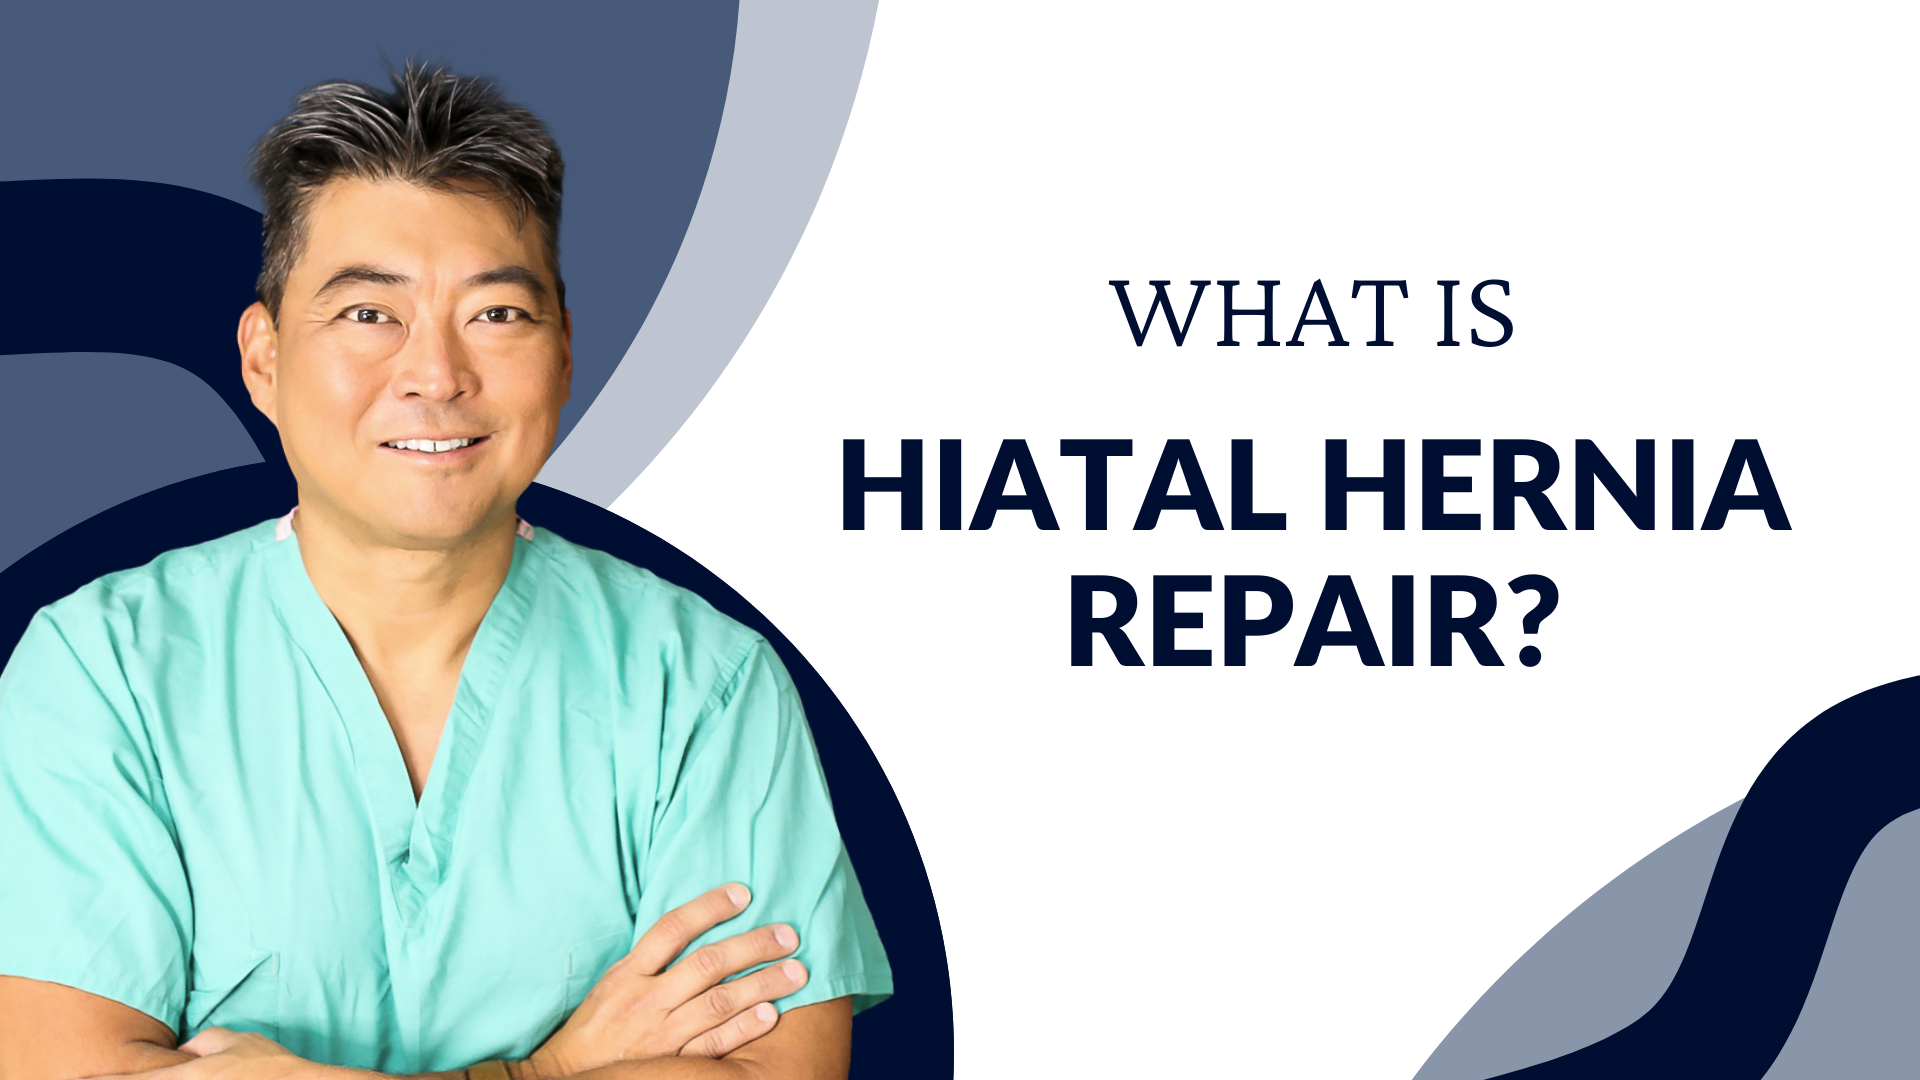 What Is Hiatal Hernia Repair